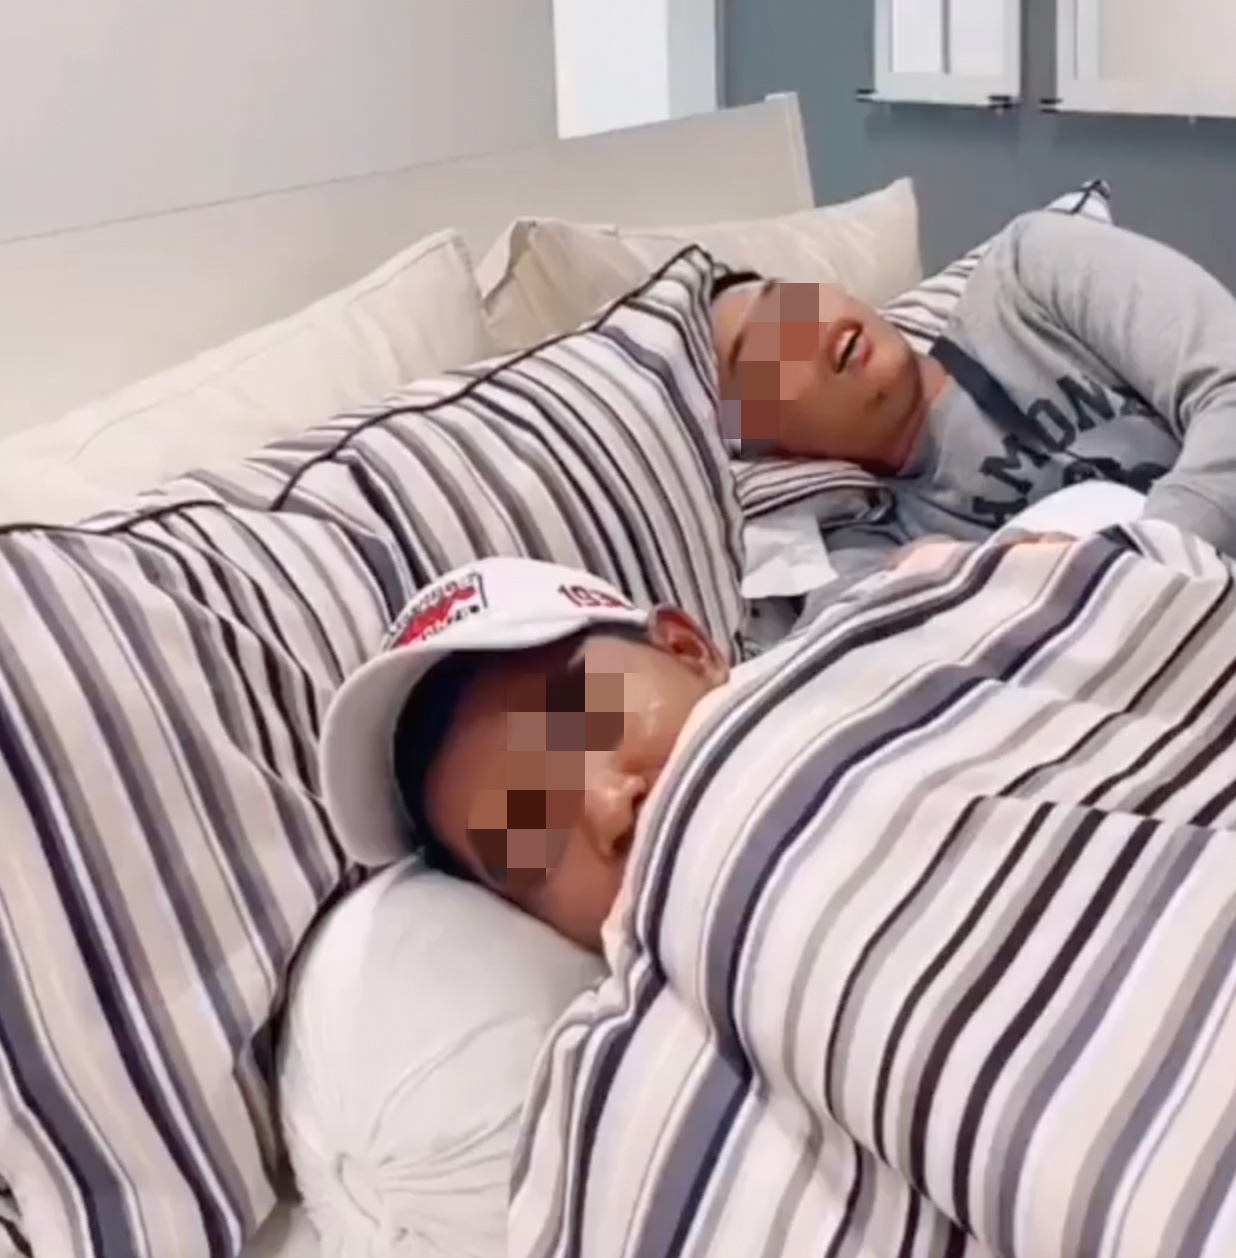 2 maskless men sleeping on a bed in ikea penang